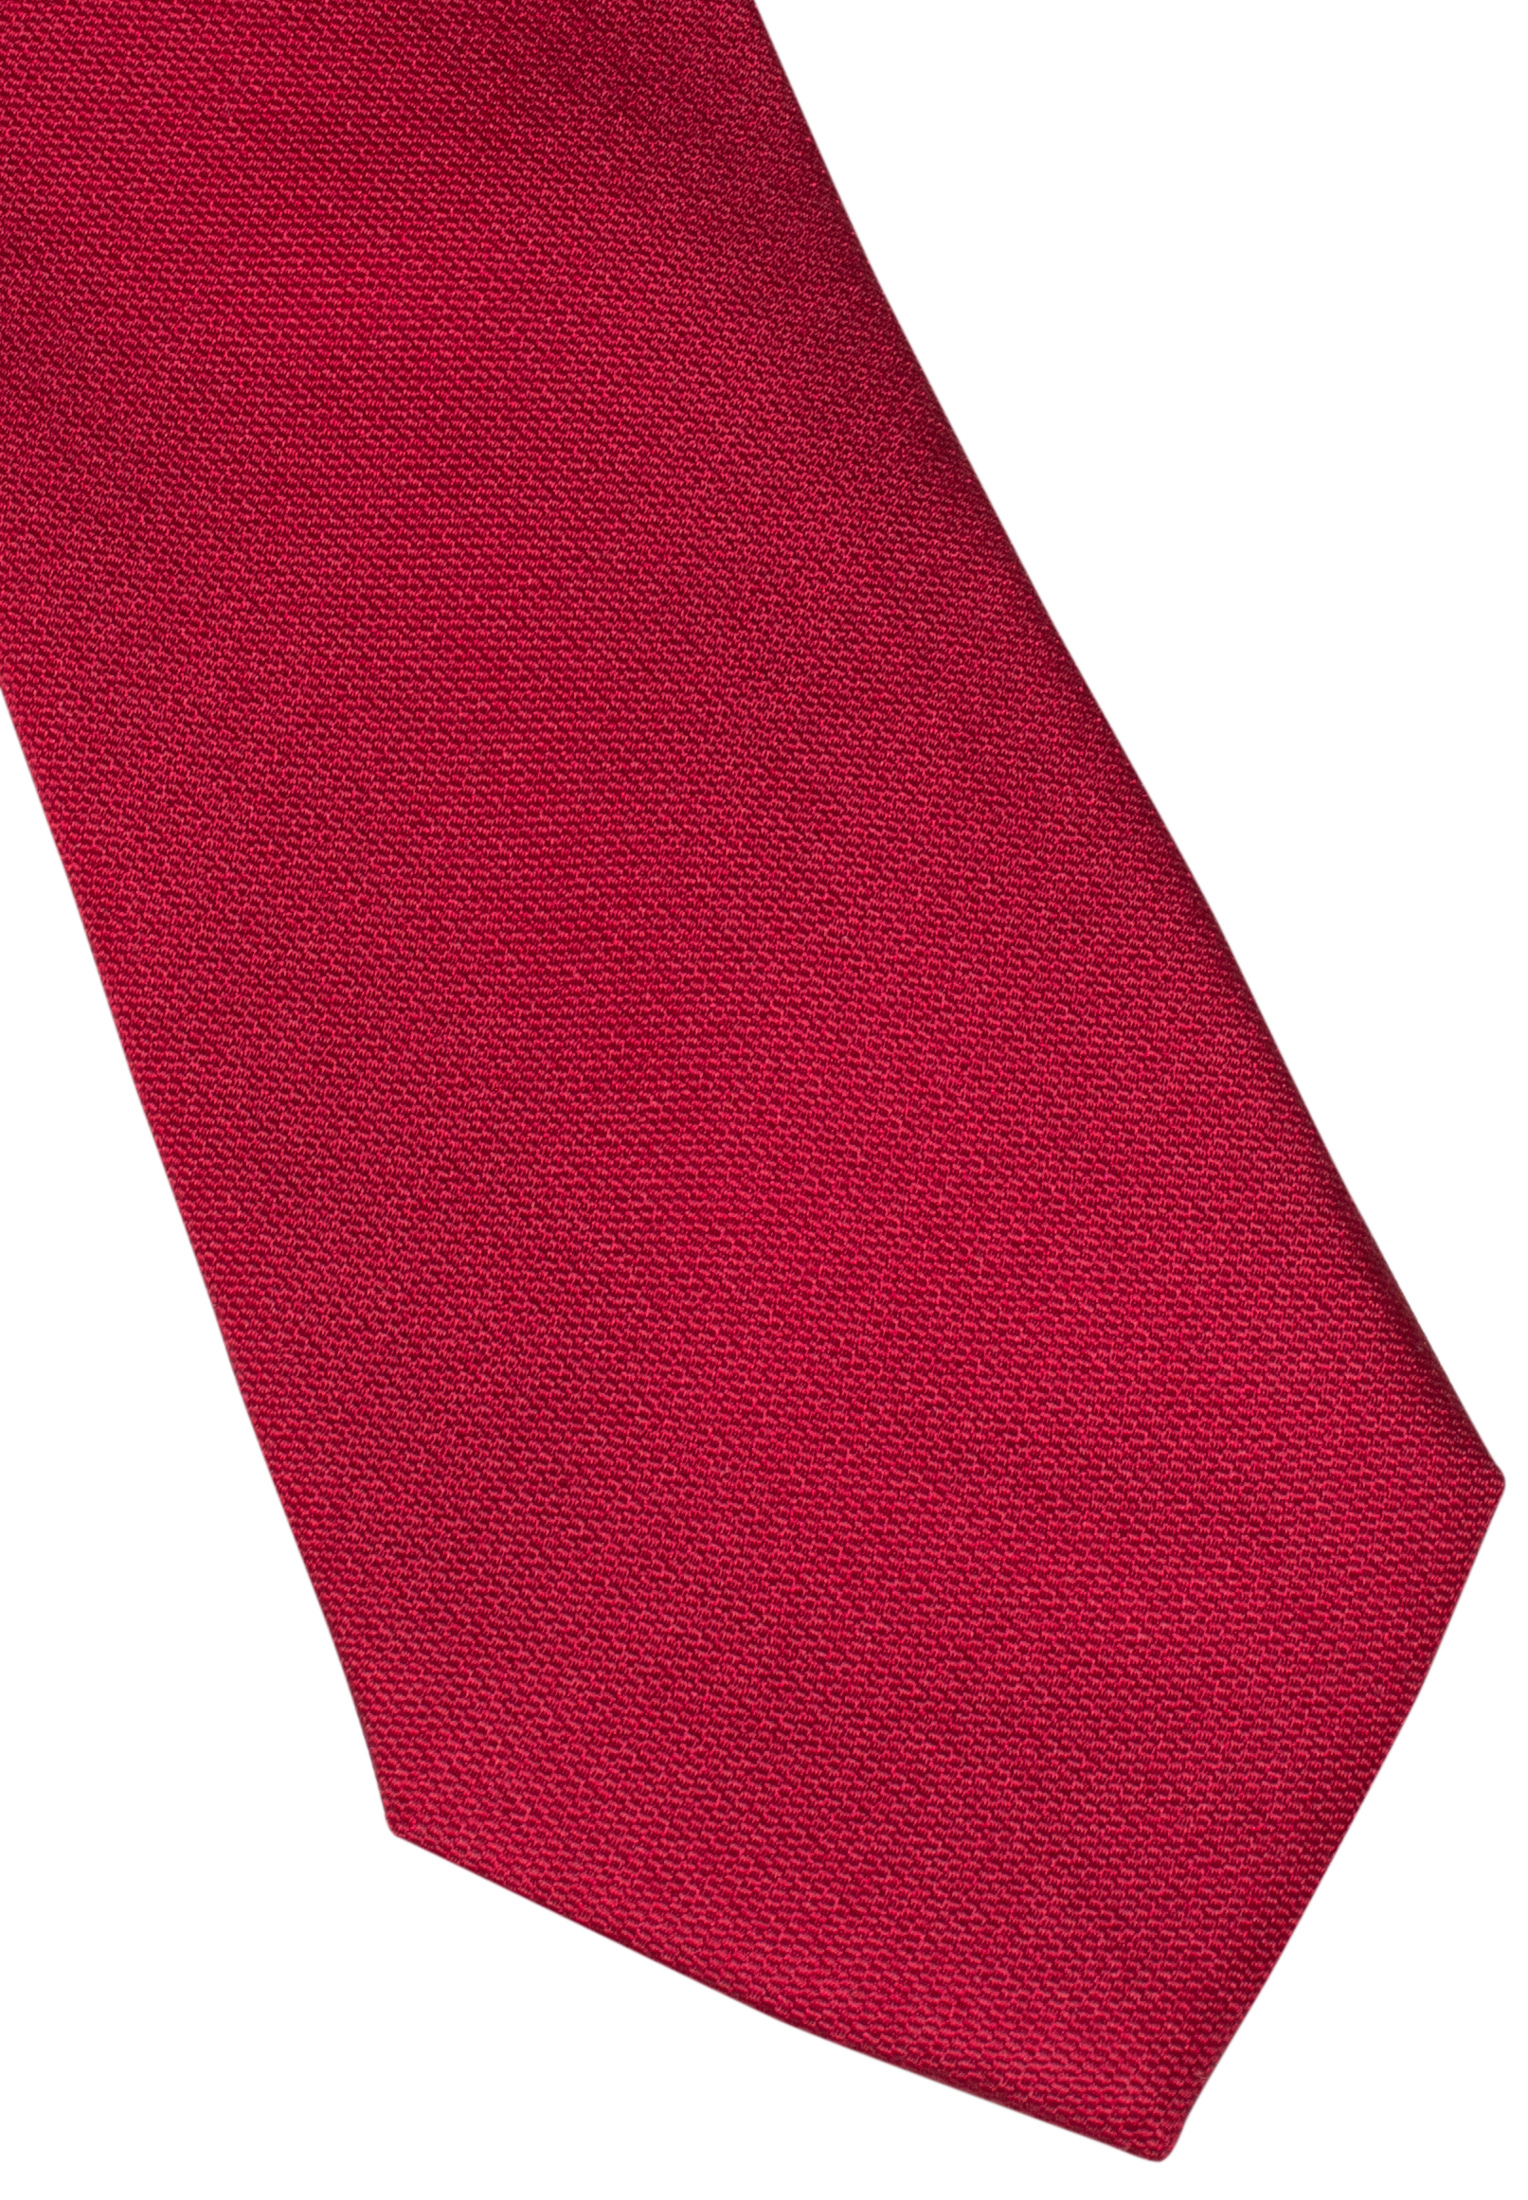 Krawatte in rot unifarben | rot | 142 | 1AC00020-05-01-142